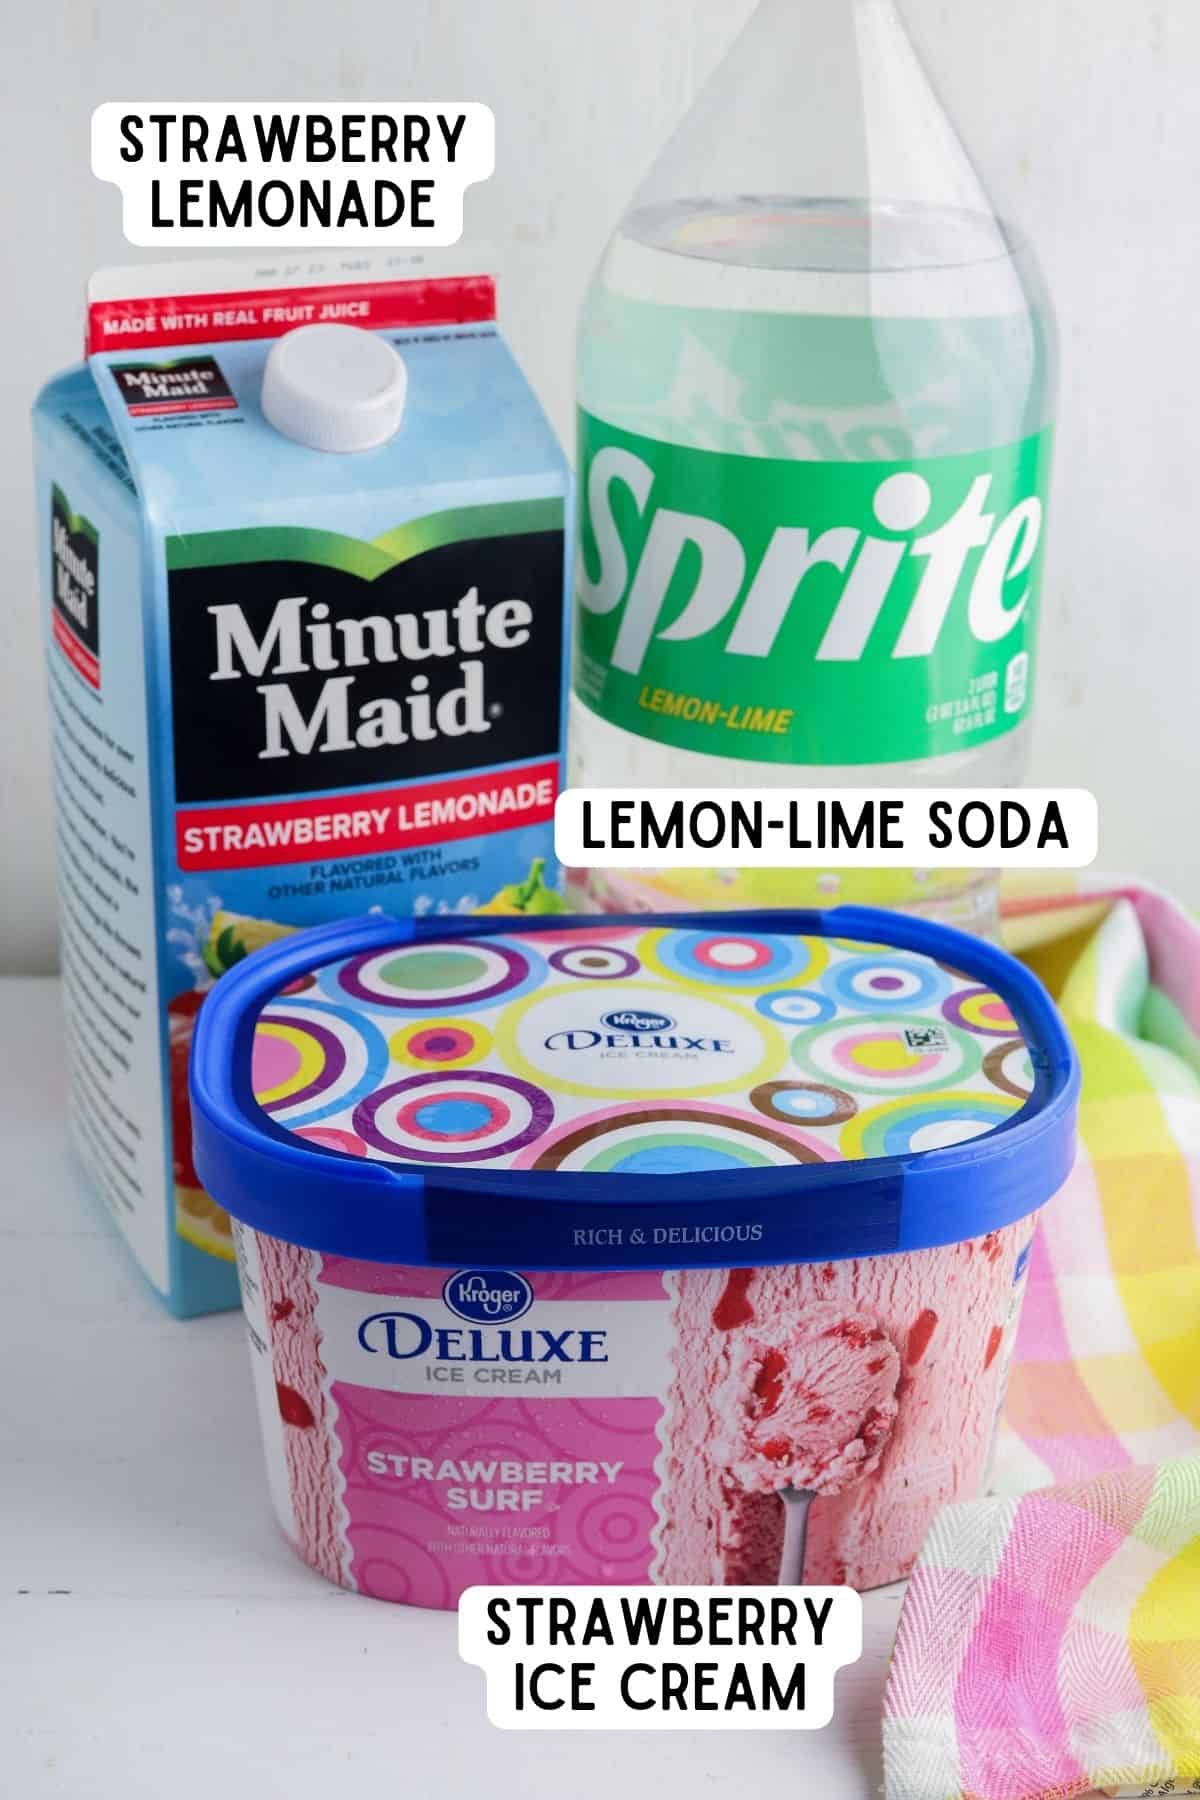 Carton of Minute Maid Strawberry Lemonade, 2 Liter bottle of Sprite, and half gallon of Strawberry Ice Cream.